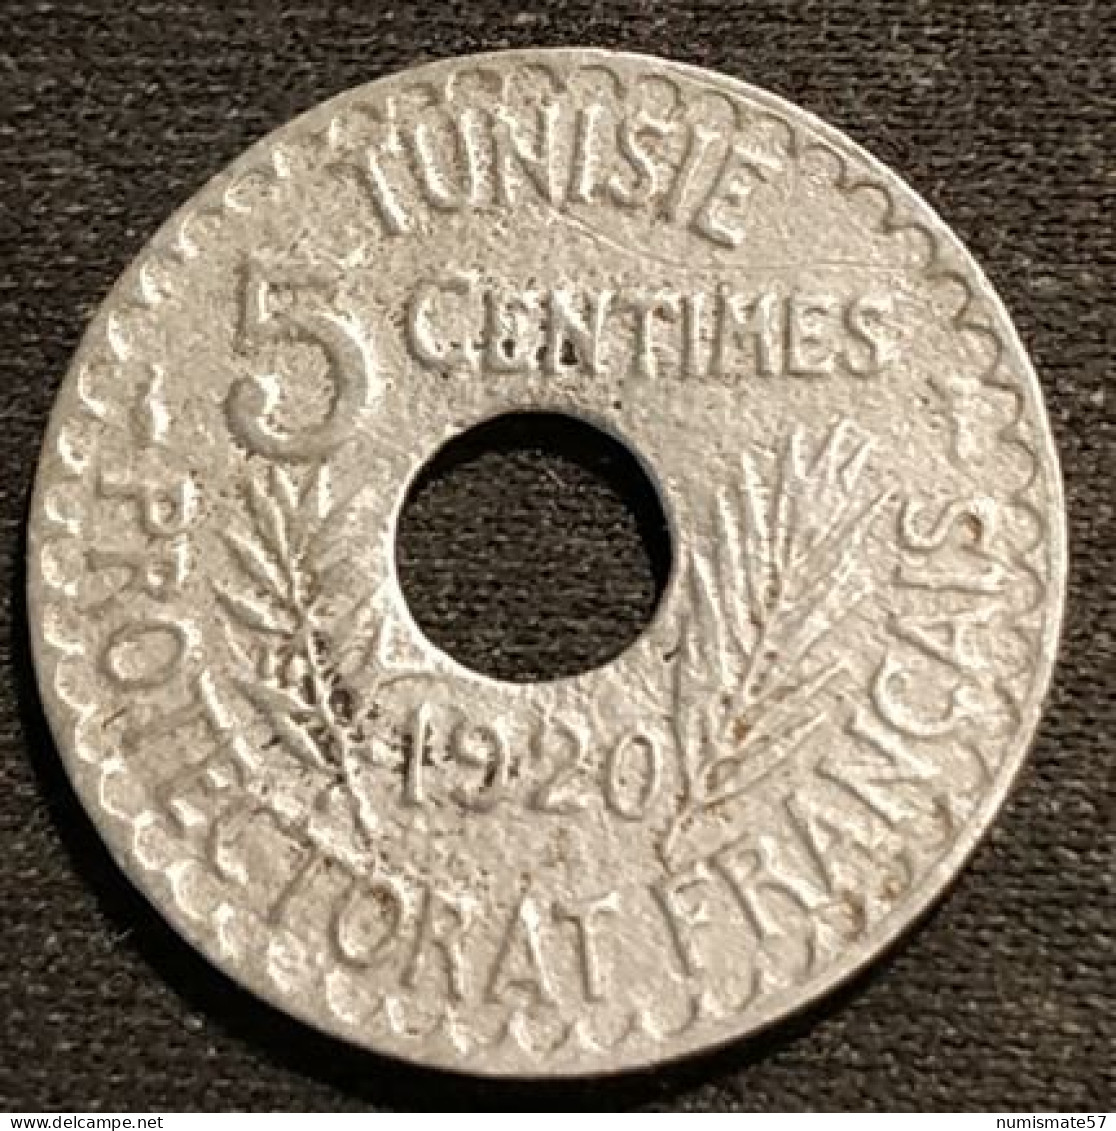 TUNISIE - TUNISIA - 5 CENTIMES 1920 ( 1339 ) - Grand Module - Muhammad Al-Nasir - Protectorat Français - KM 242 - Tunisie